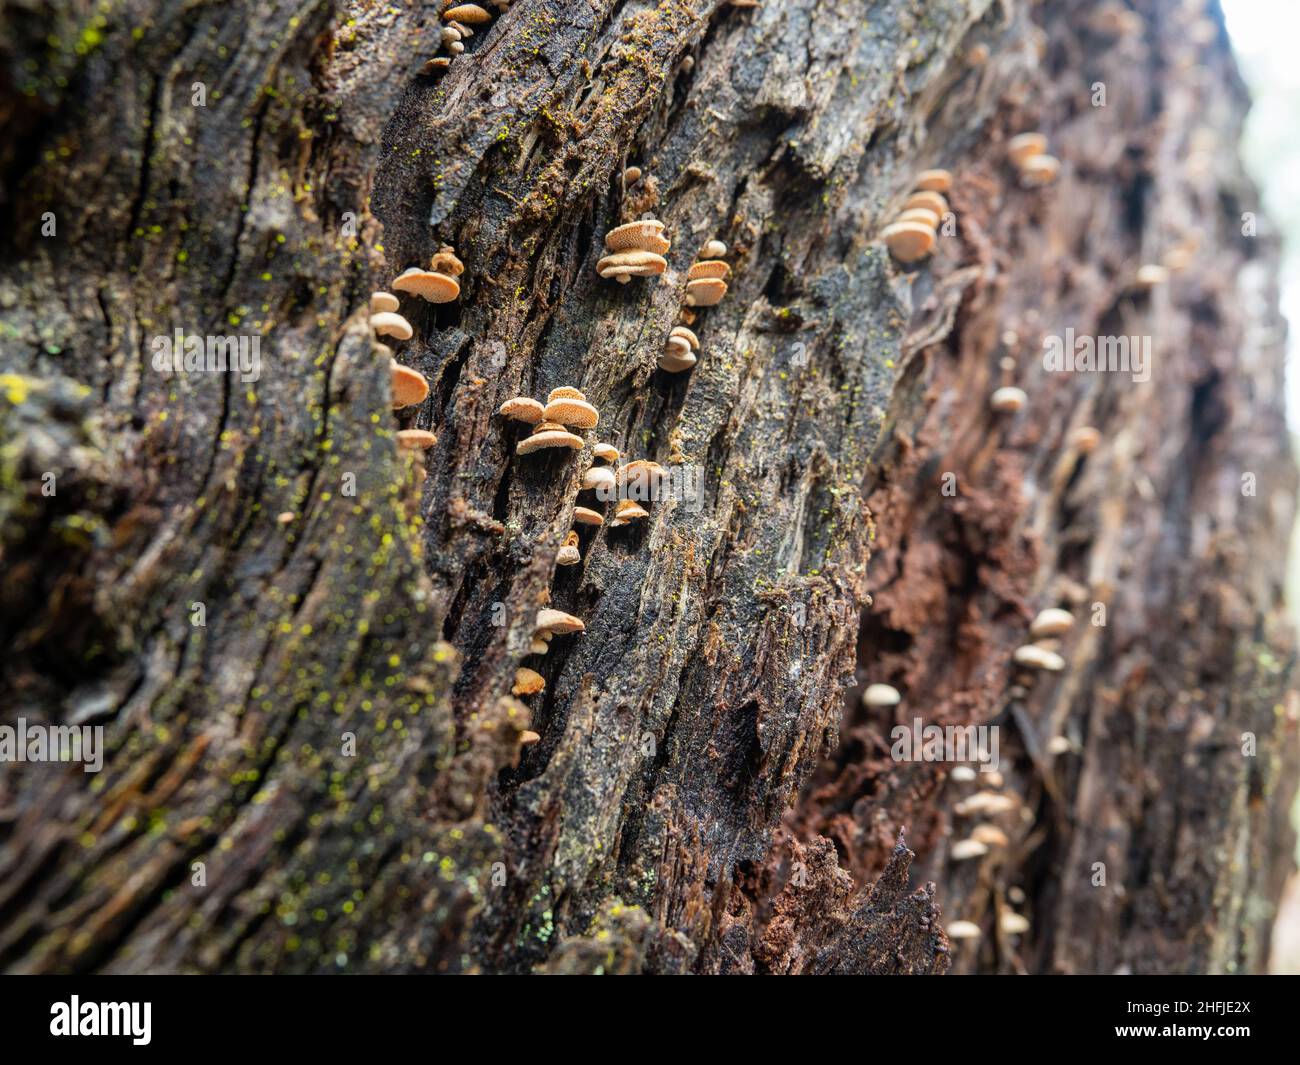 Small Dictyopanus pusillus fungi growing on a tree trunk on the Mornington Peninsula, Victoria Stock Photo